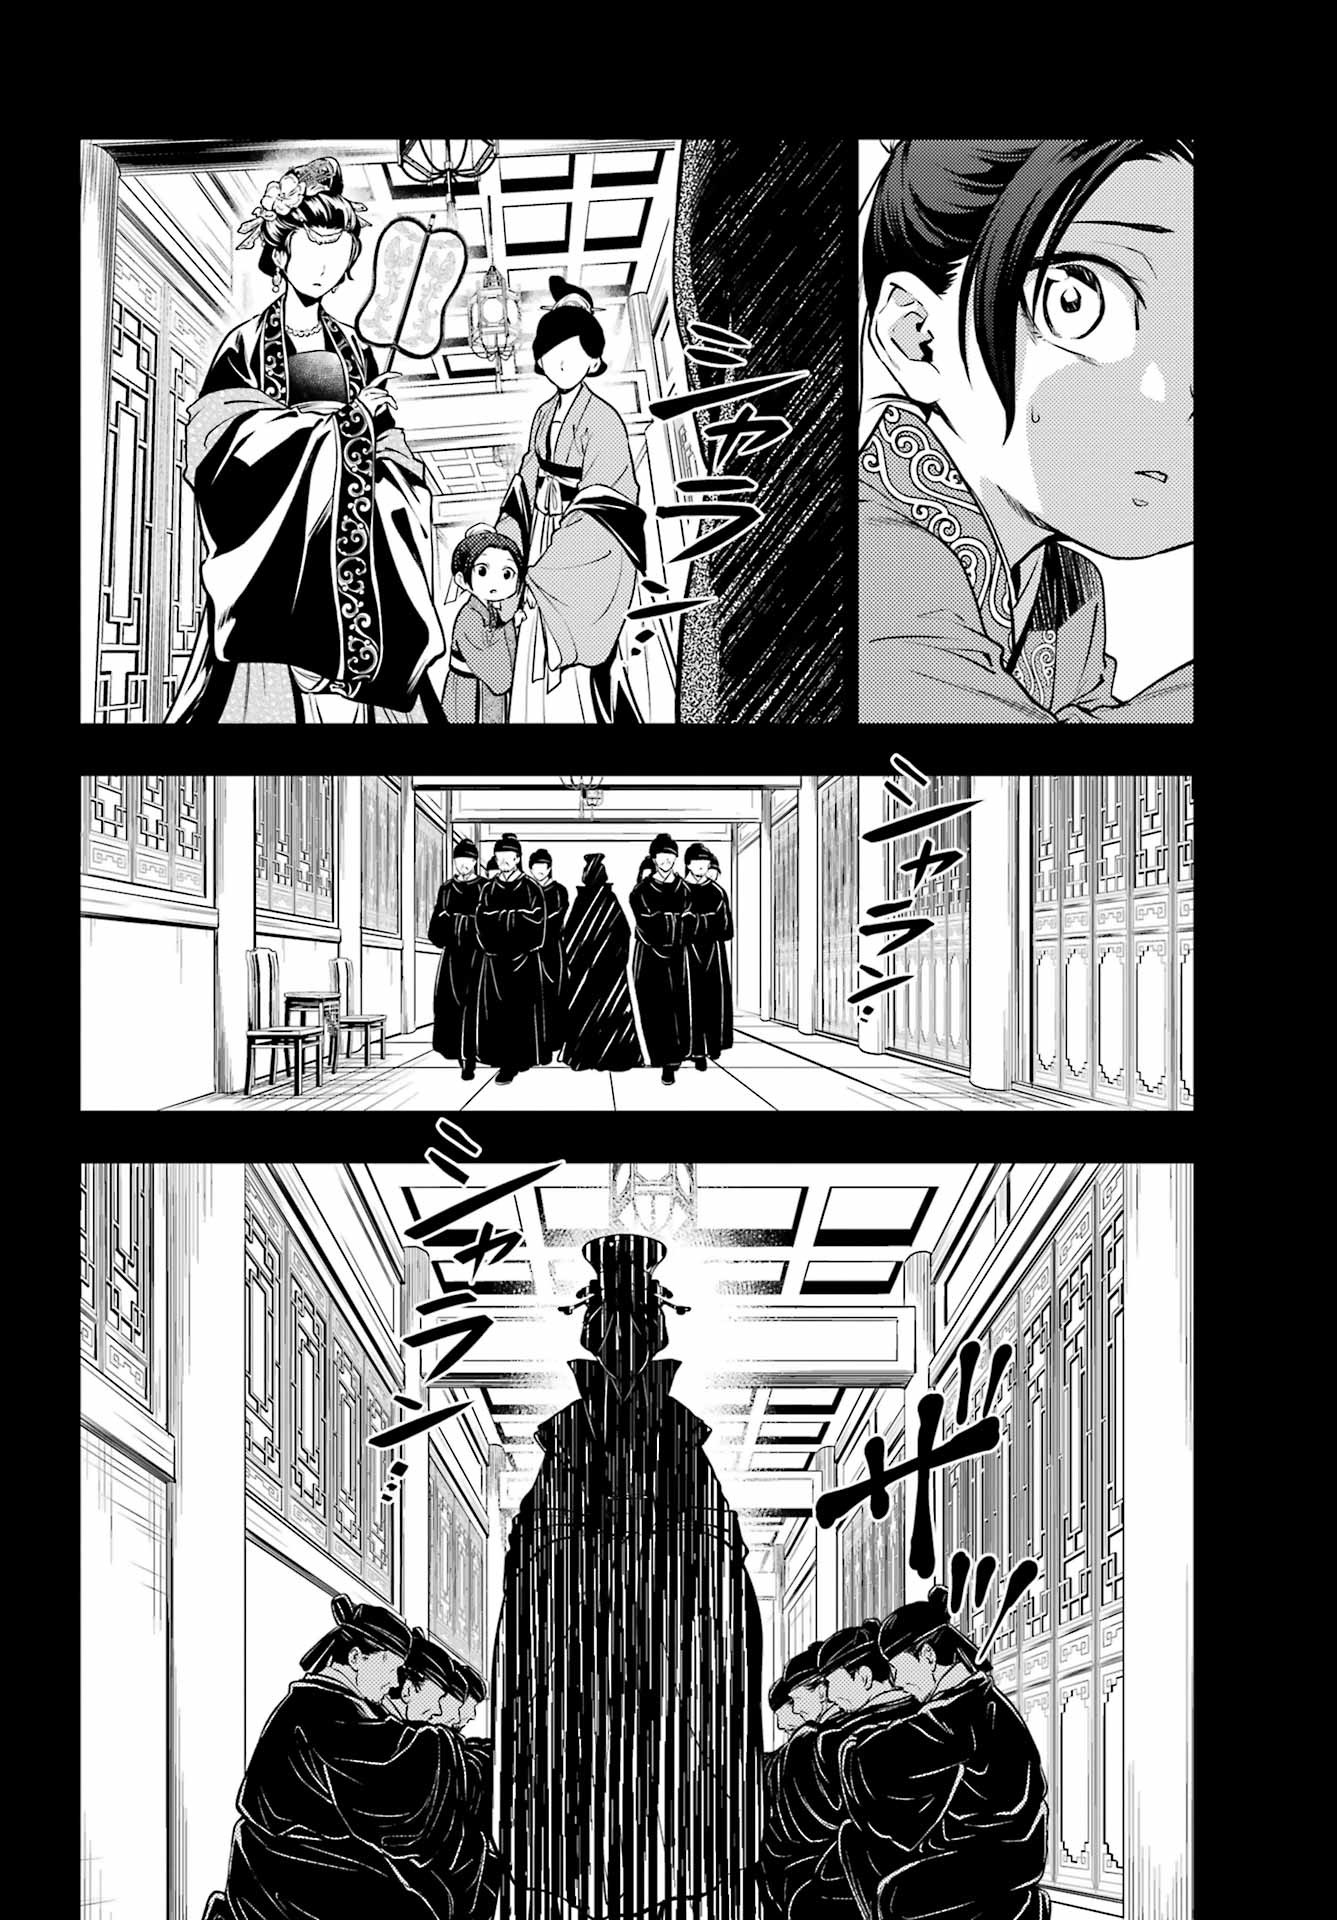 Kusuriya no Hitorigoto - Chapter 55-1 - Page 4